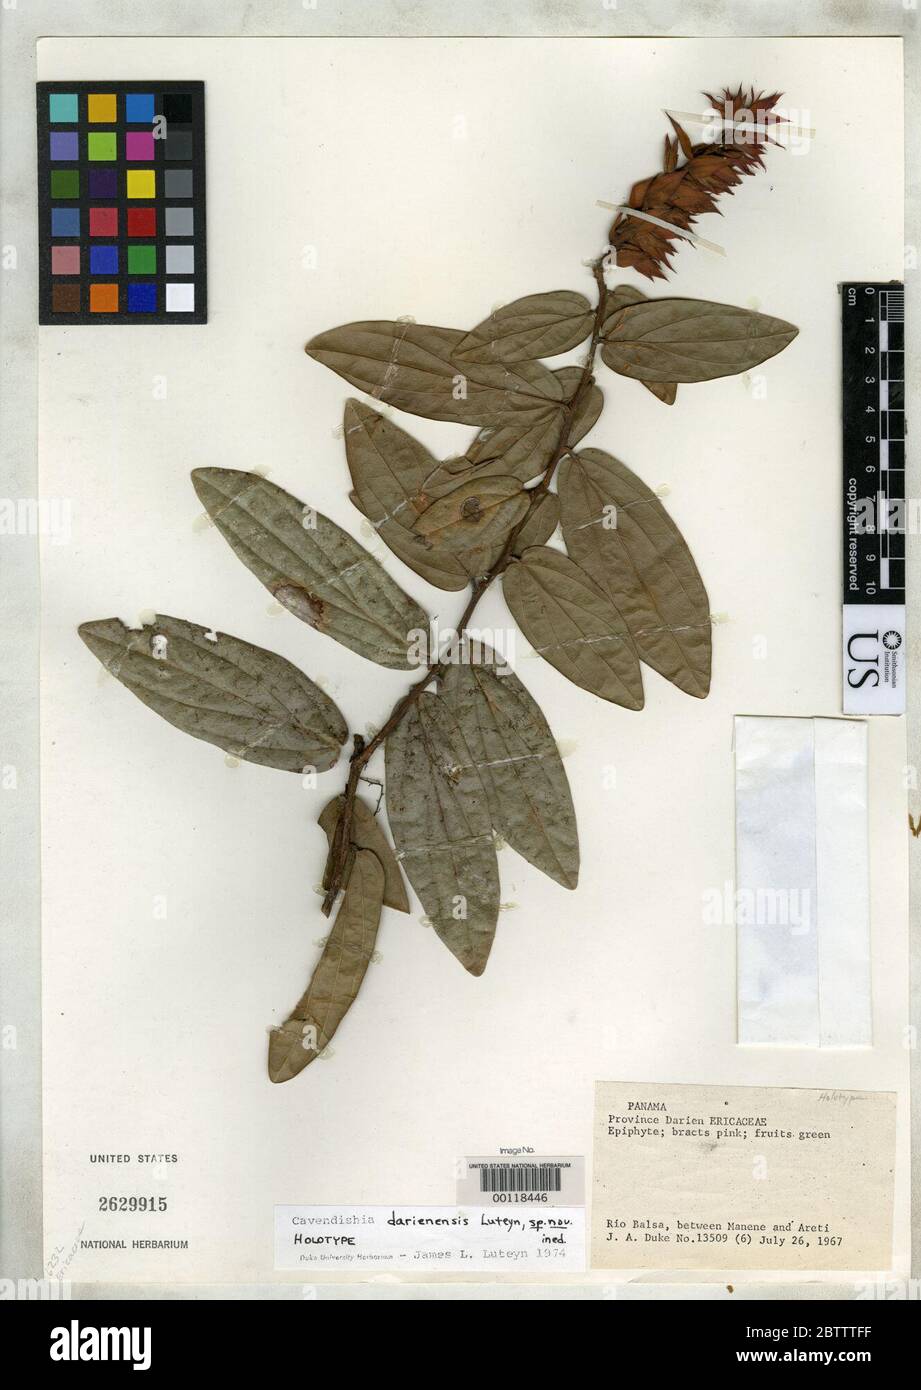 Cavendishia darienensis Luteyn. Stock Photo